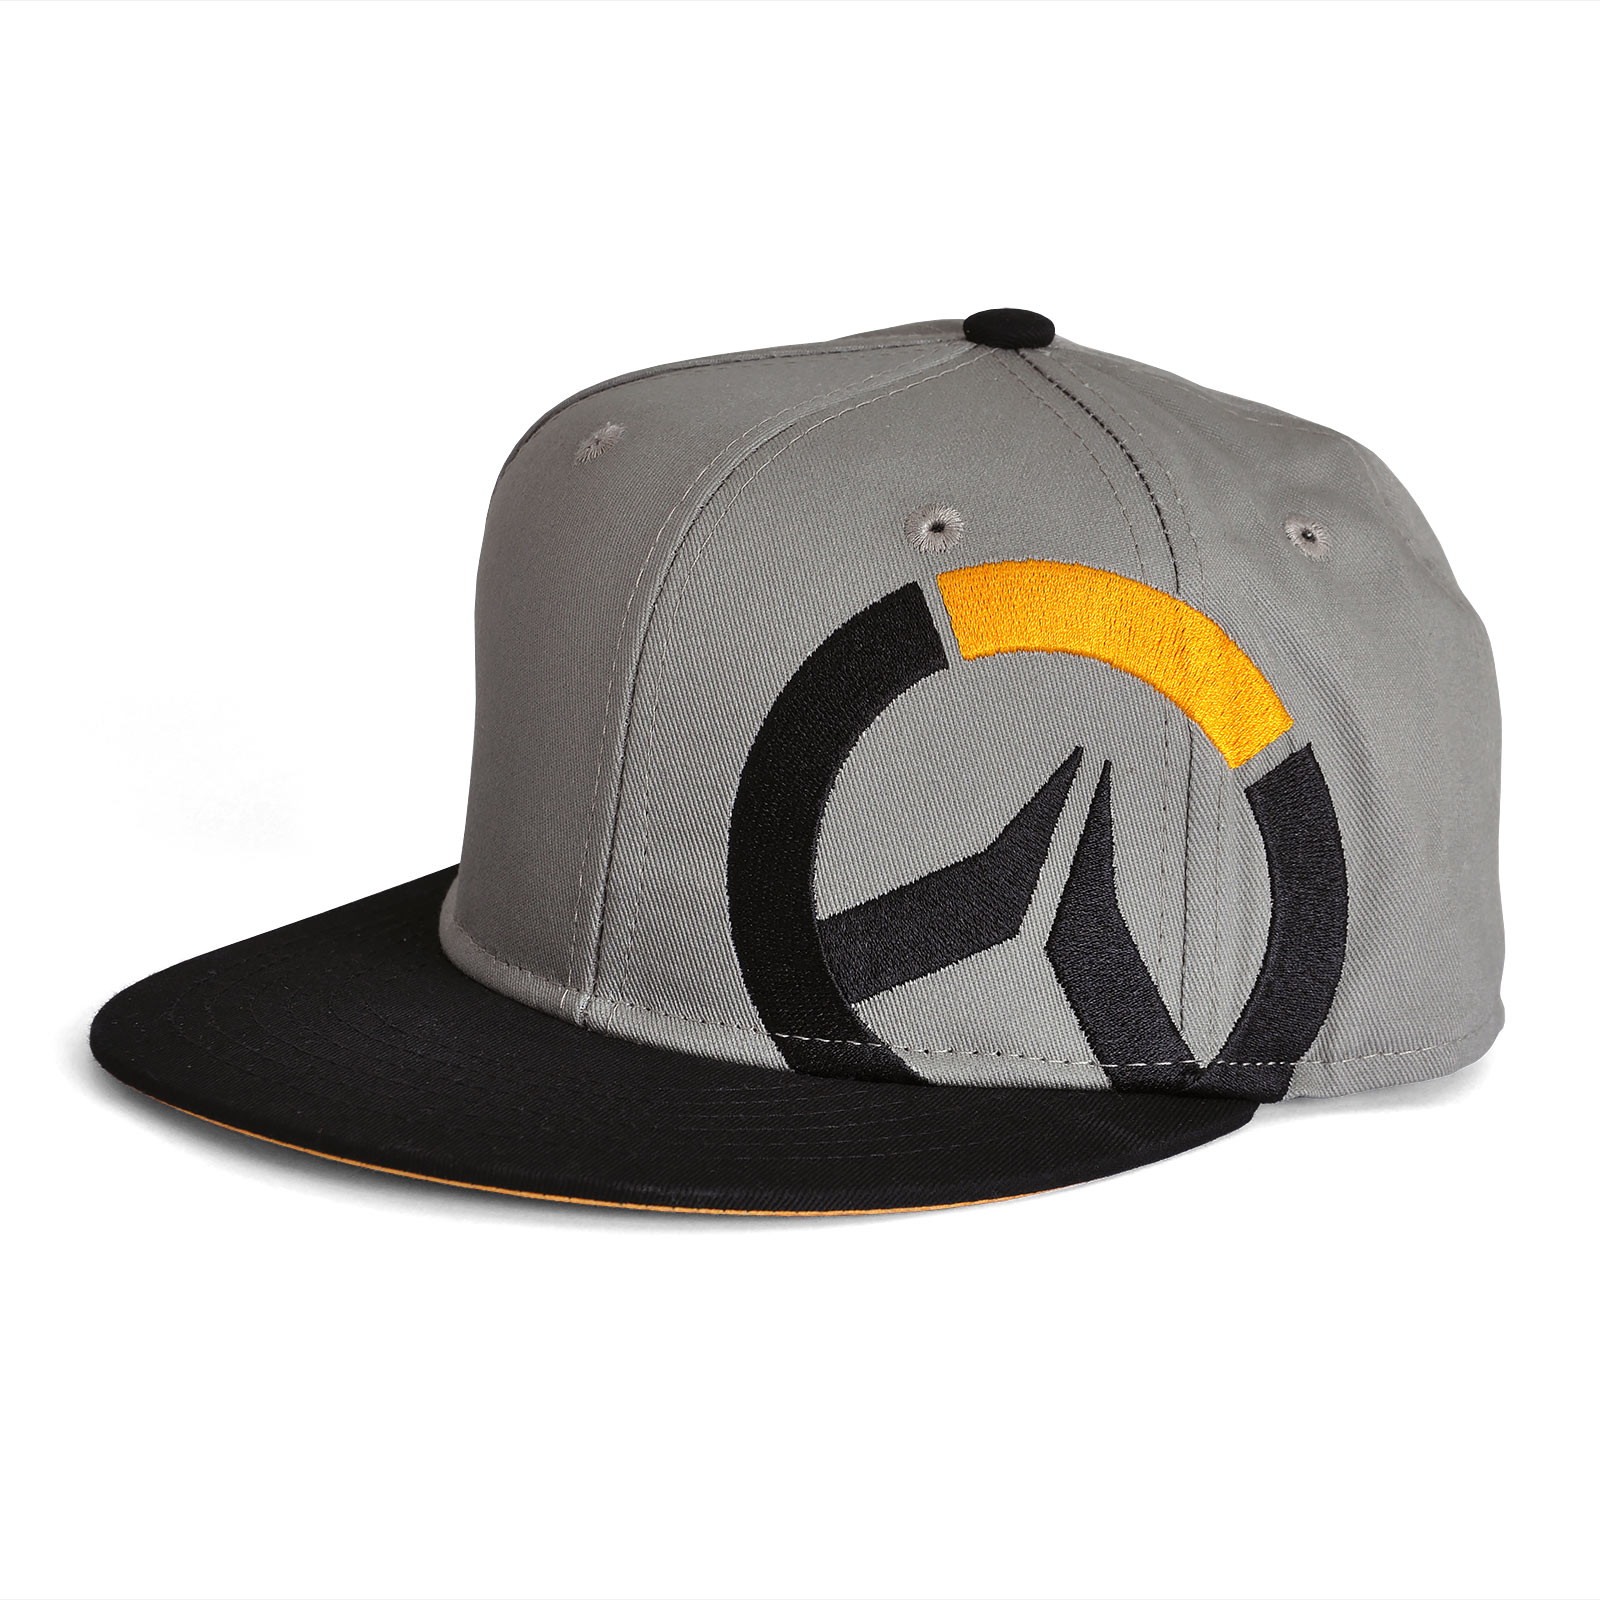 Overwatch - Logo Snapback Cap grey